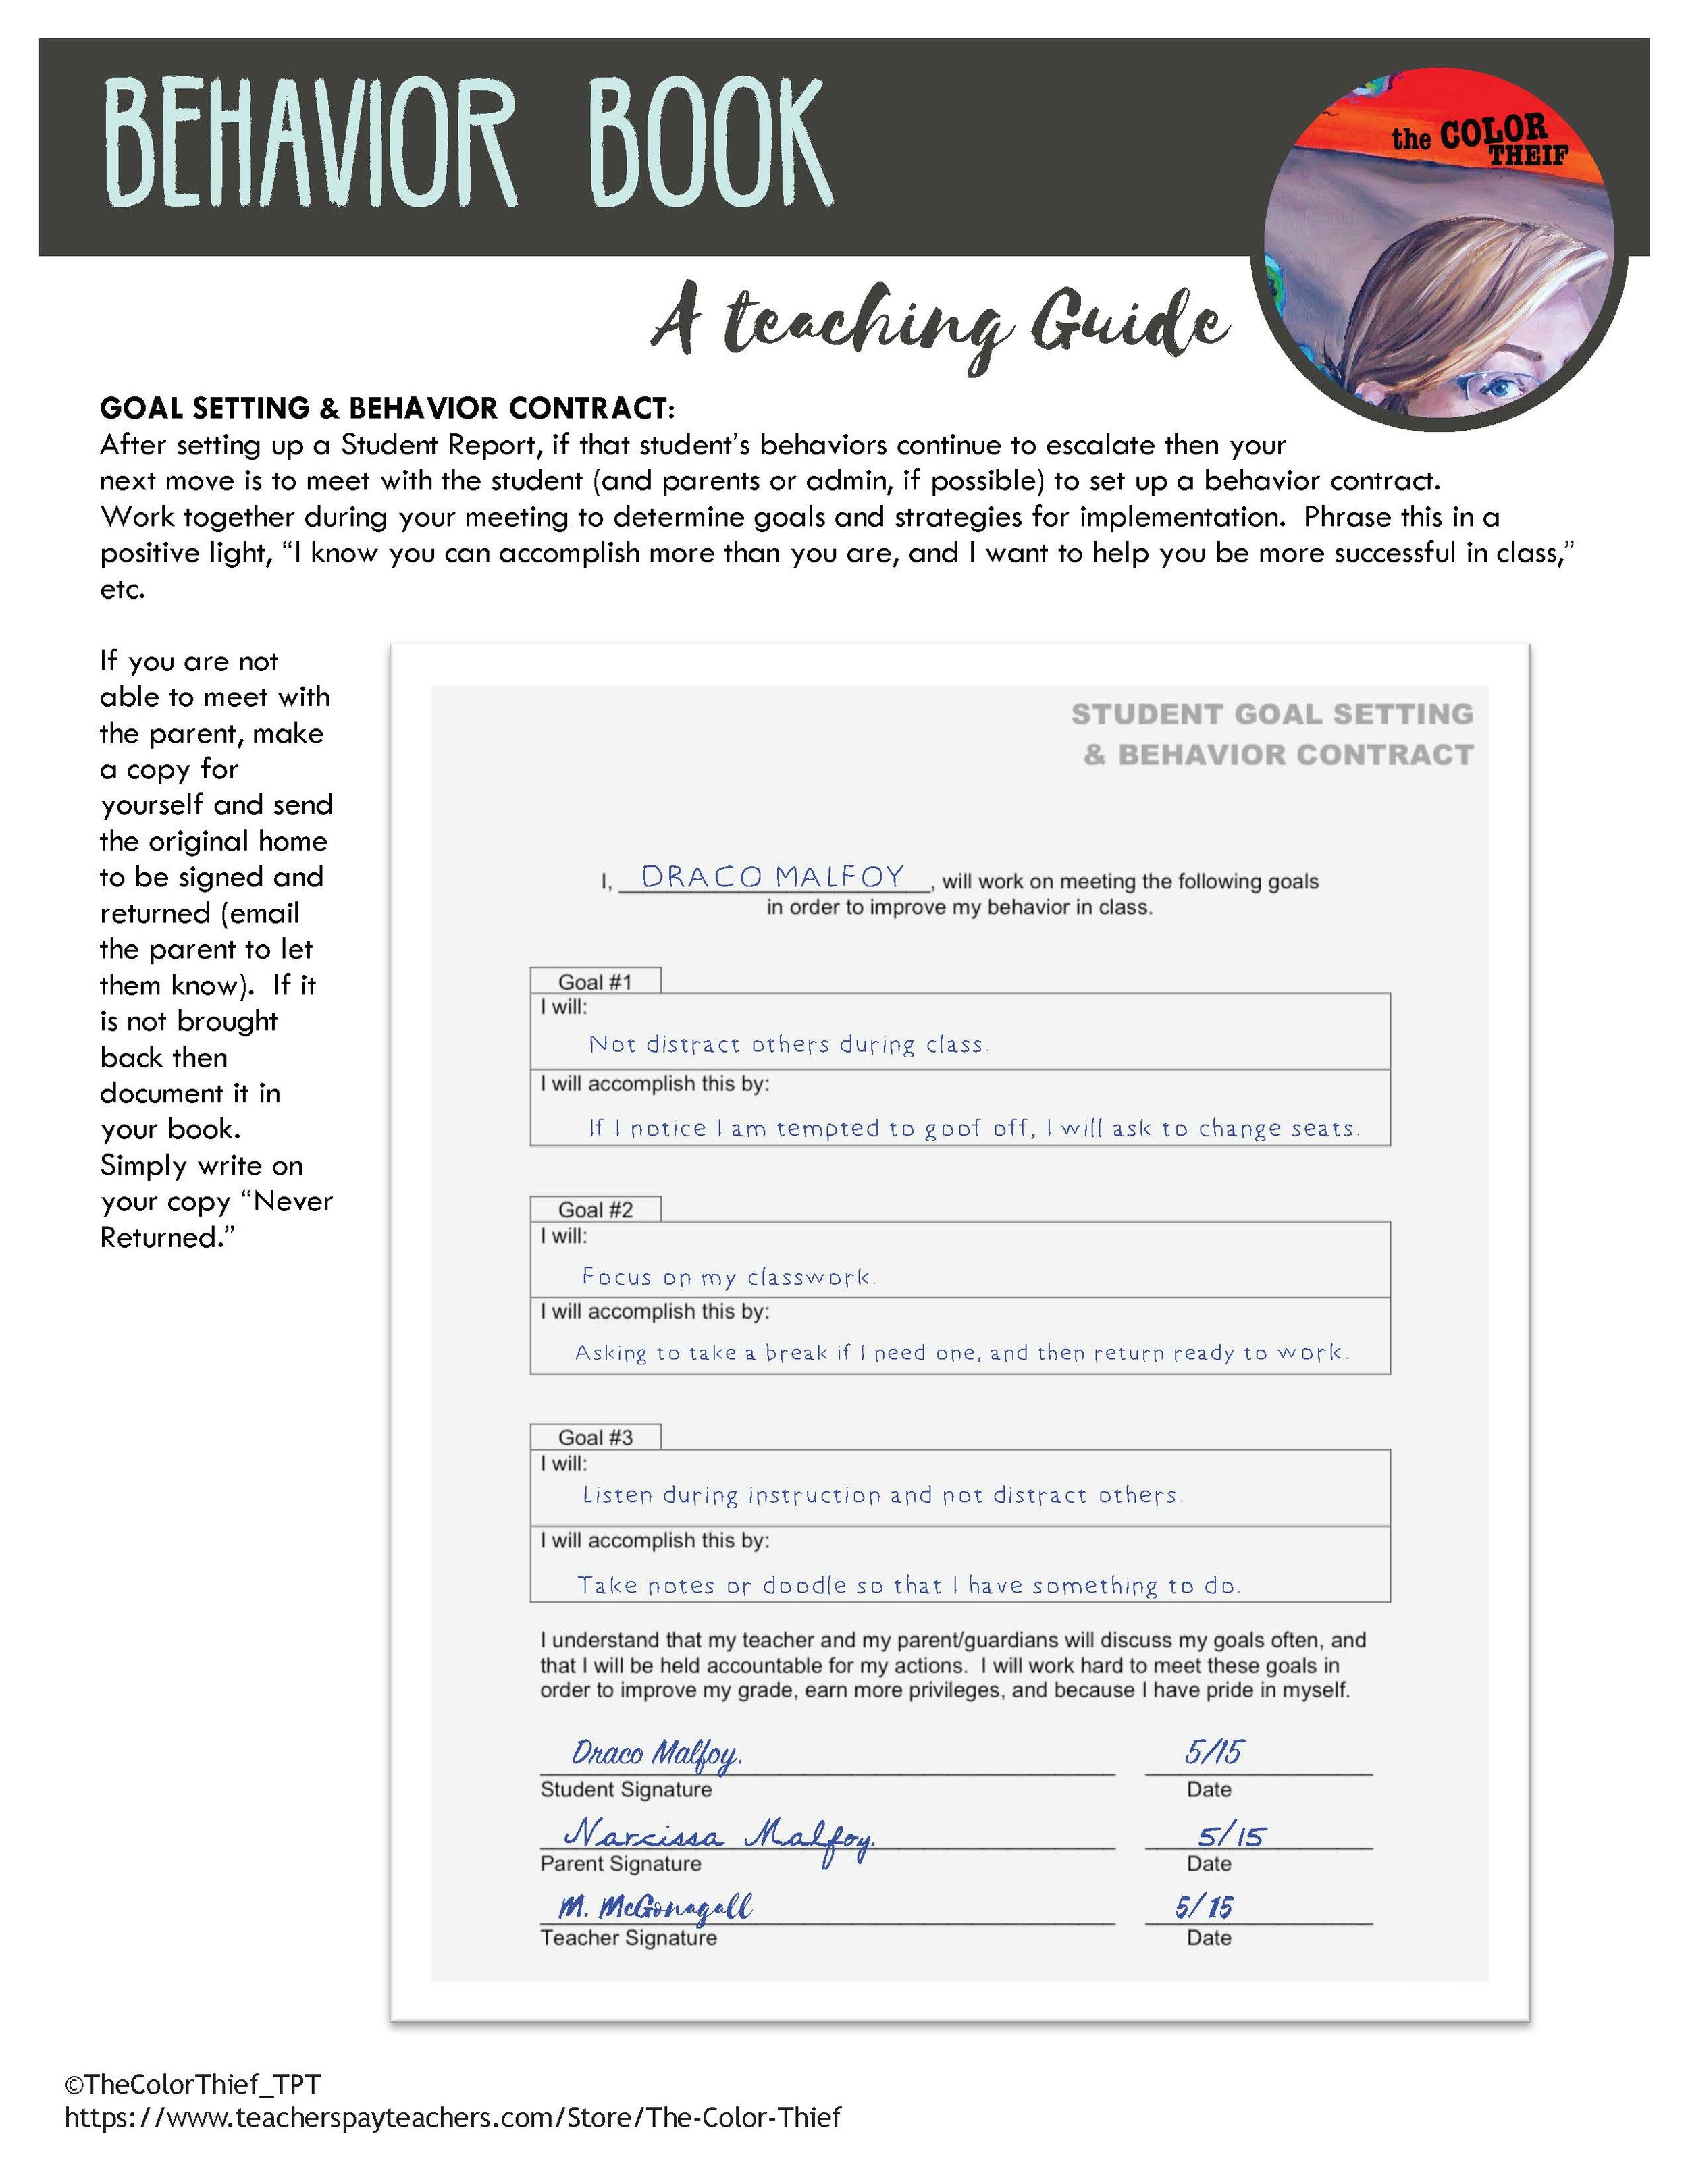 Behavior Book Teaching Guide 1_Page_4.jpg